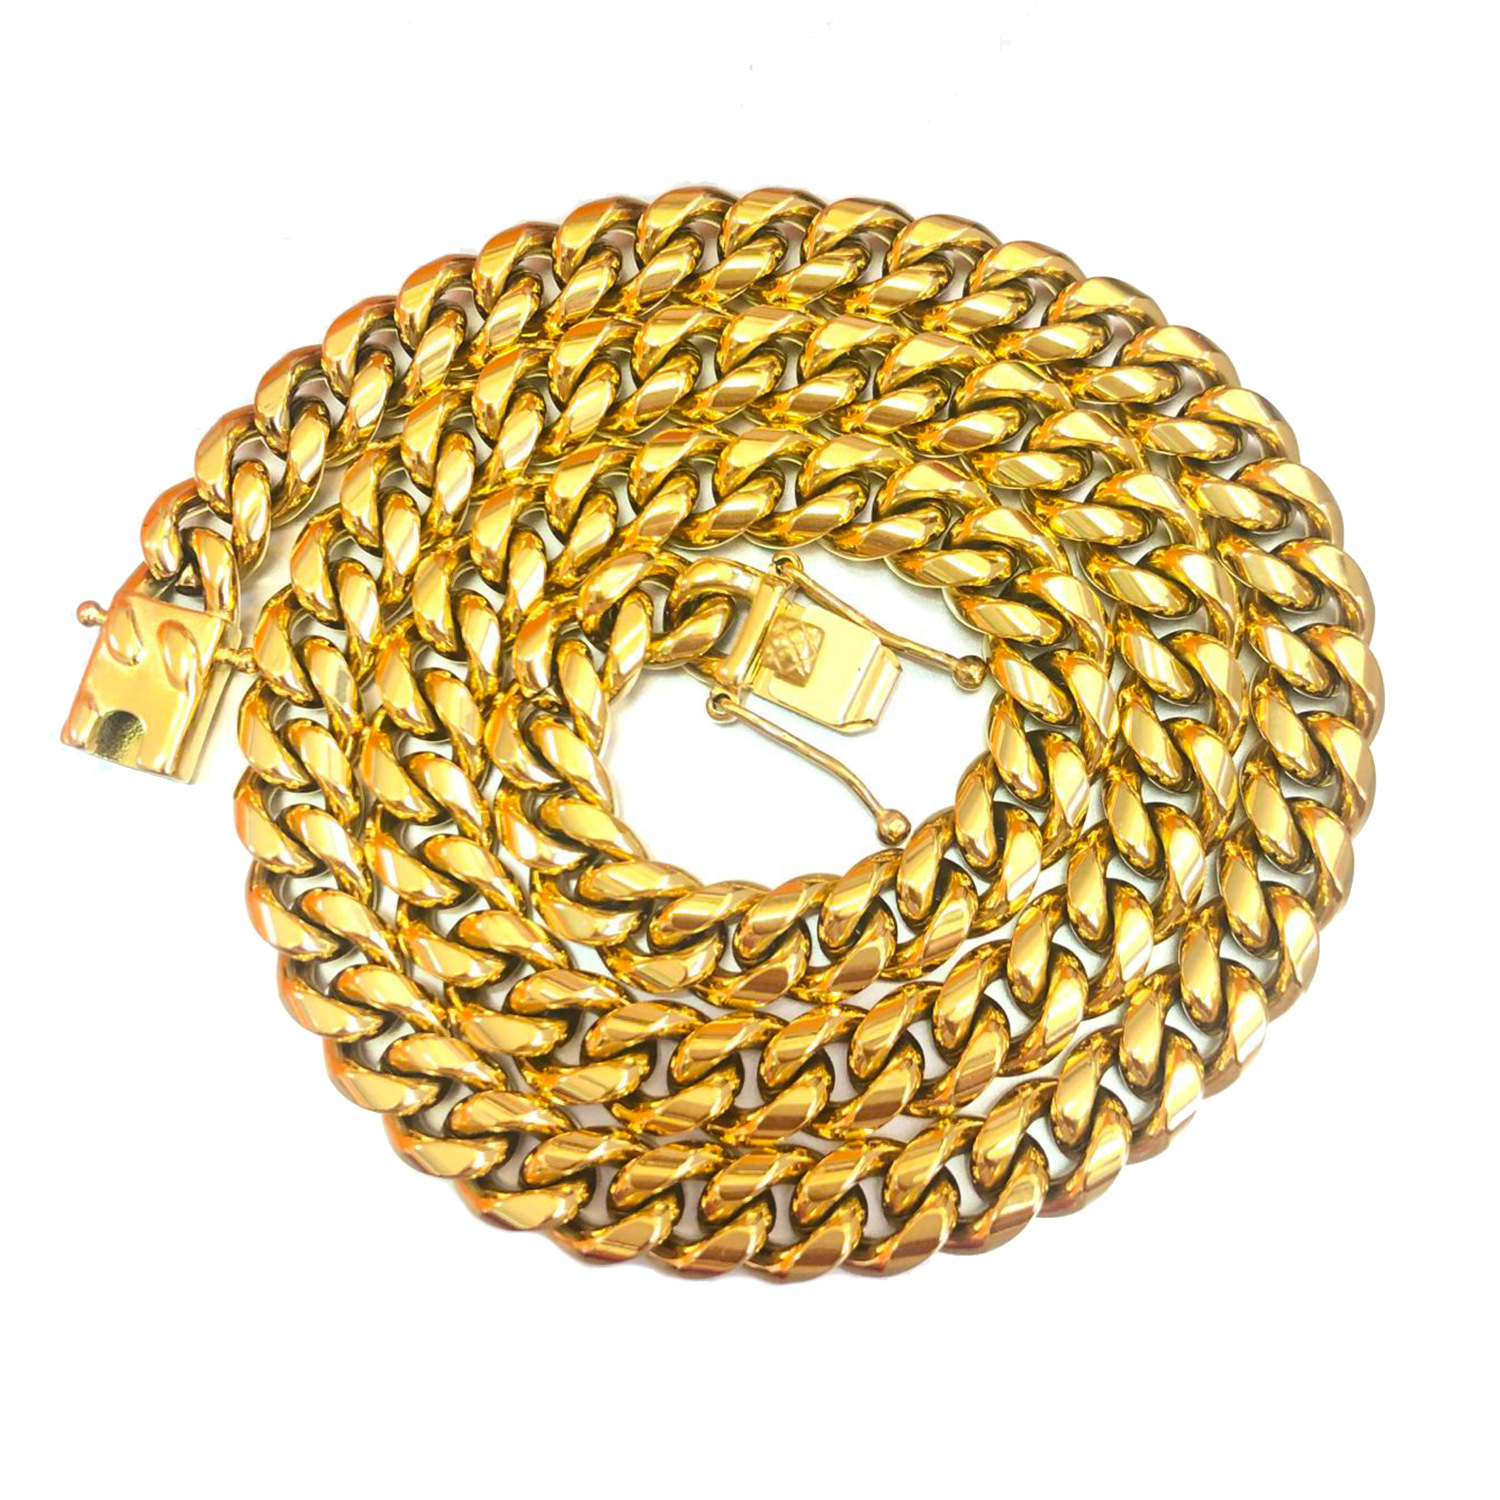 2:Necklace Gold 10mm*60cm